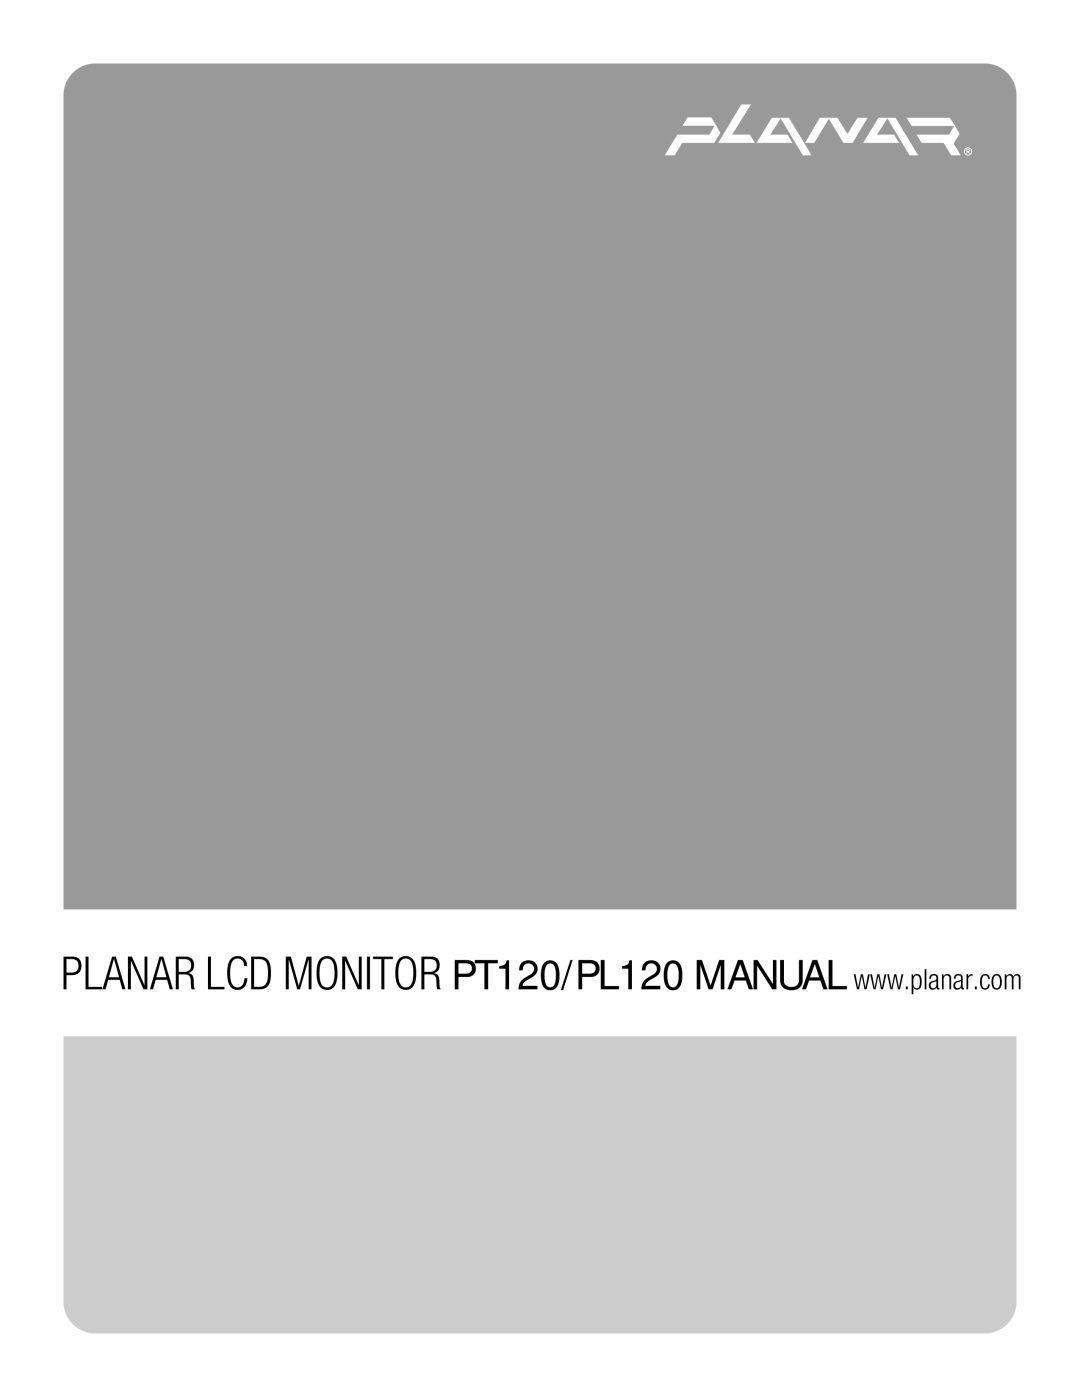 Planar PL120, PT120 manual 